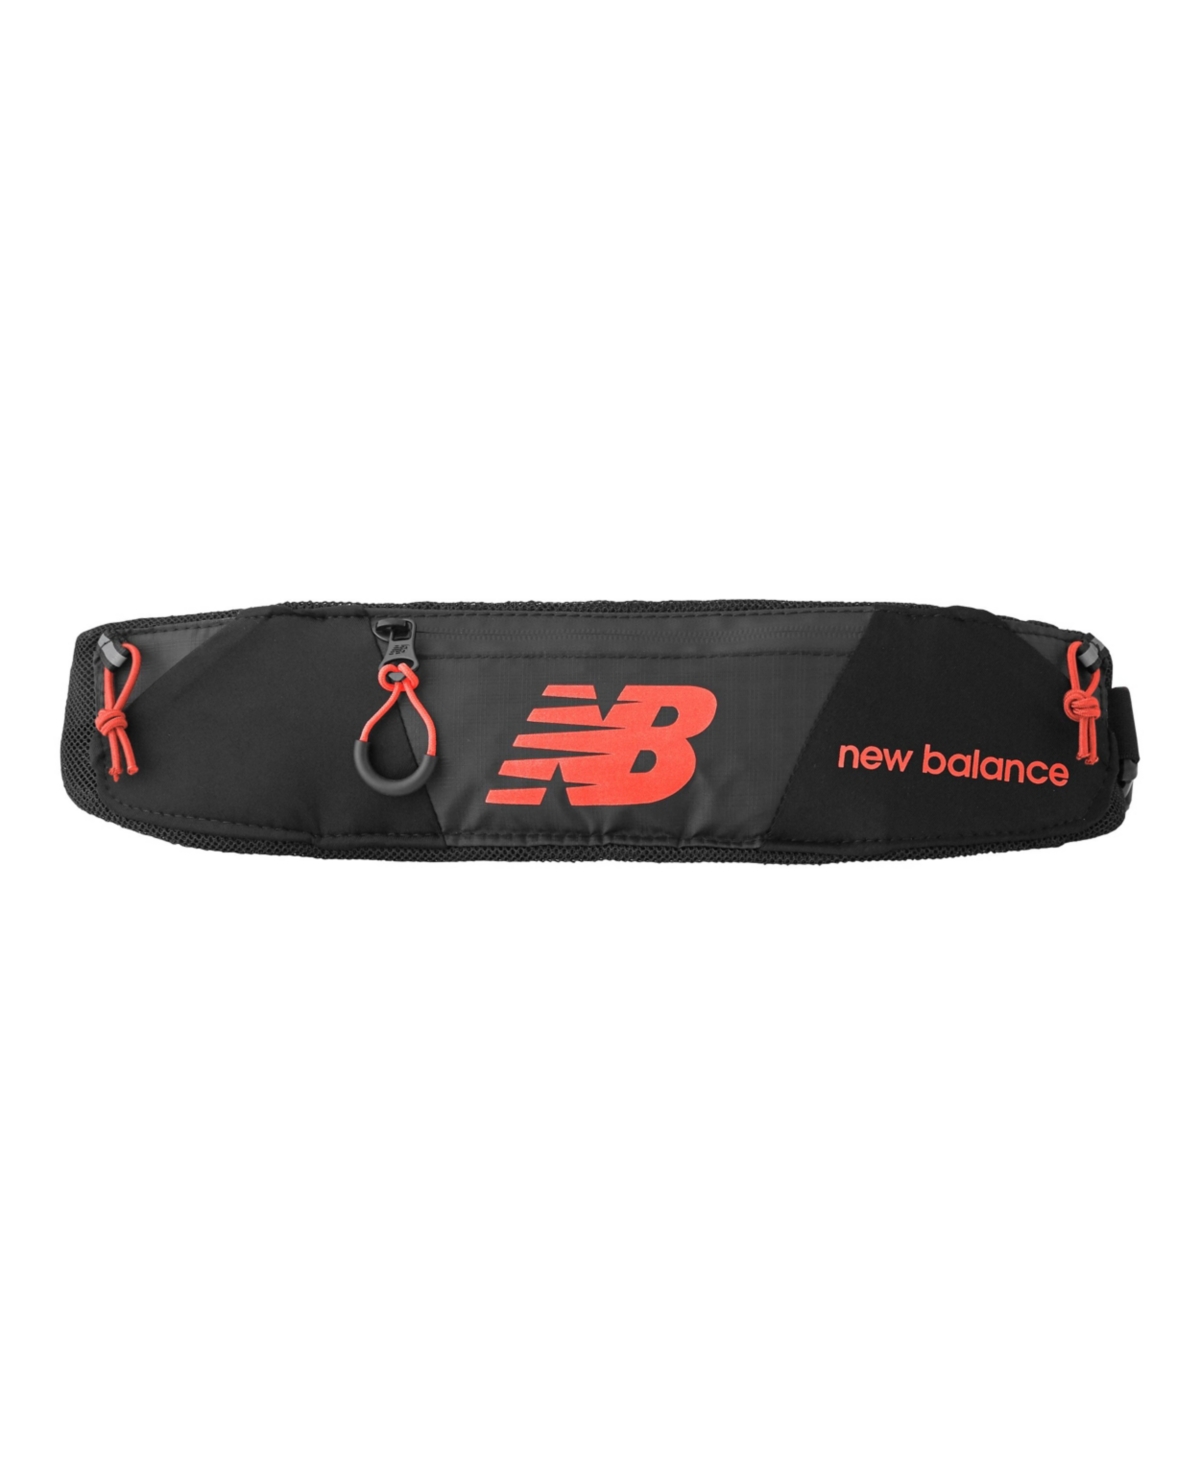 Running Accessory Belt - Black, Red